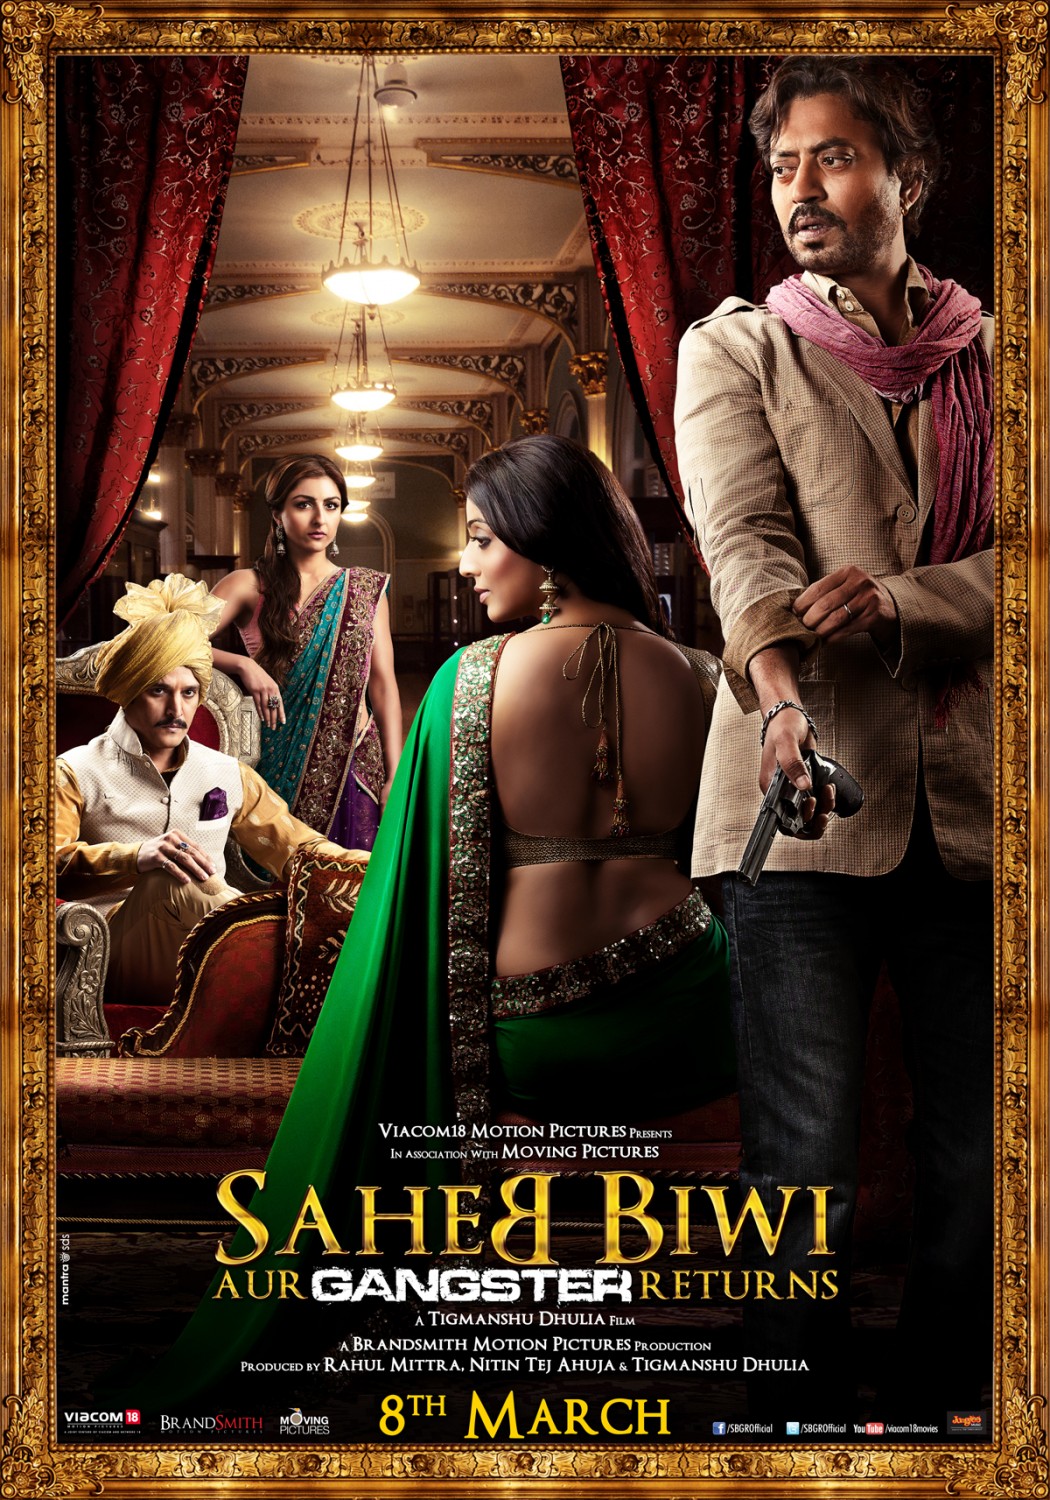 Extra Large Movie Poster Image for Saheb Biwi Aur Gangster Returns (#2 of 3)